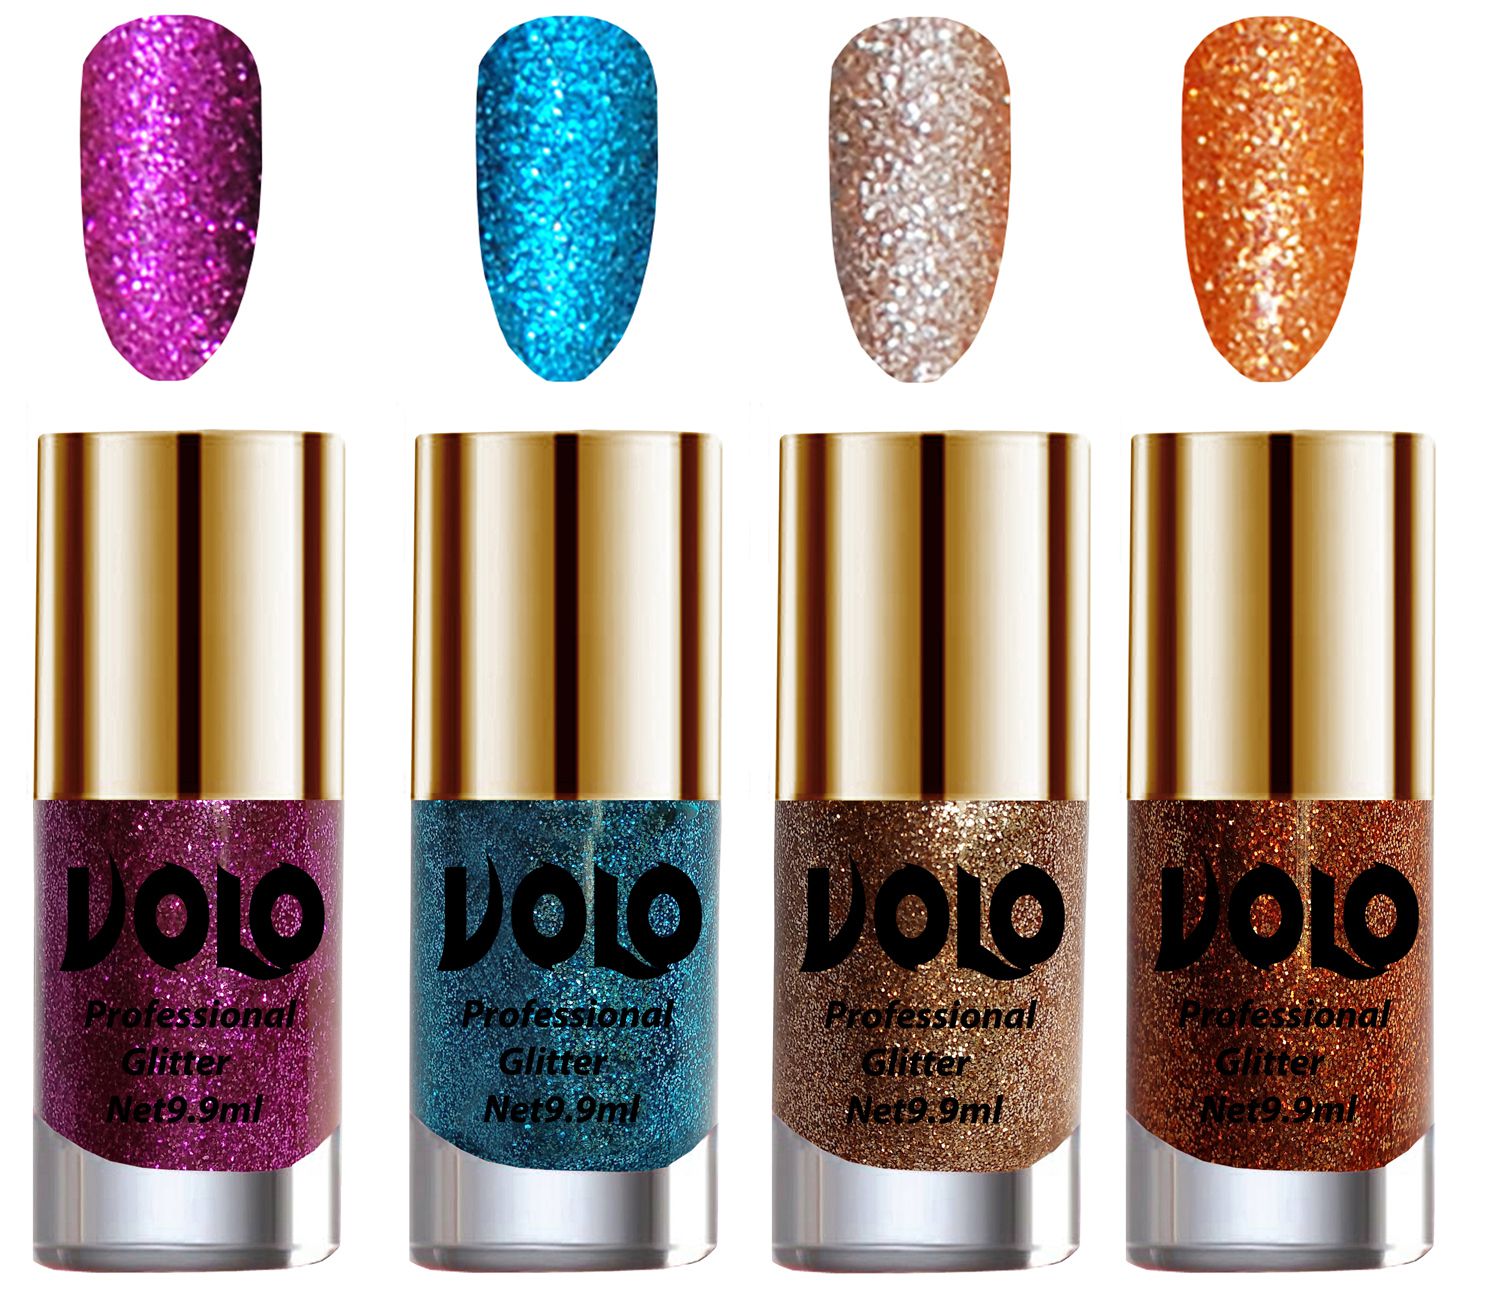     			VOLO Professionally Used Glitter Shine Nail Polish Purple,Blue,Gold Orange Pack of 4 39 mL